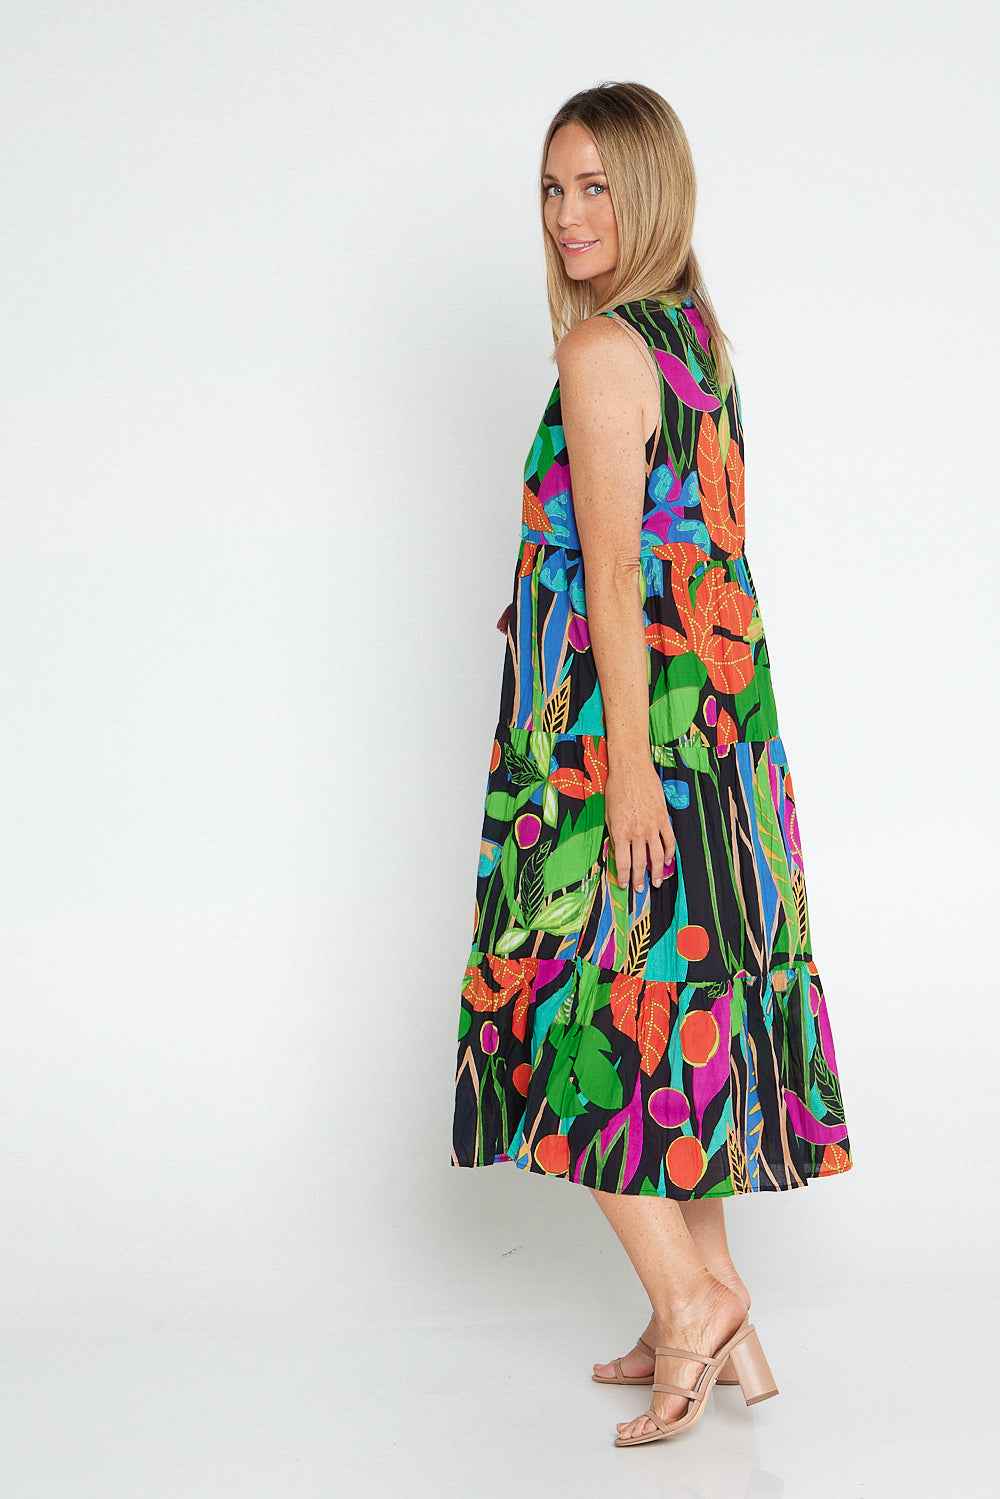 Nicossia Sleeveless Layered Dress - Summer Botanical